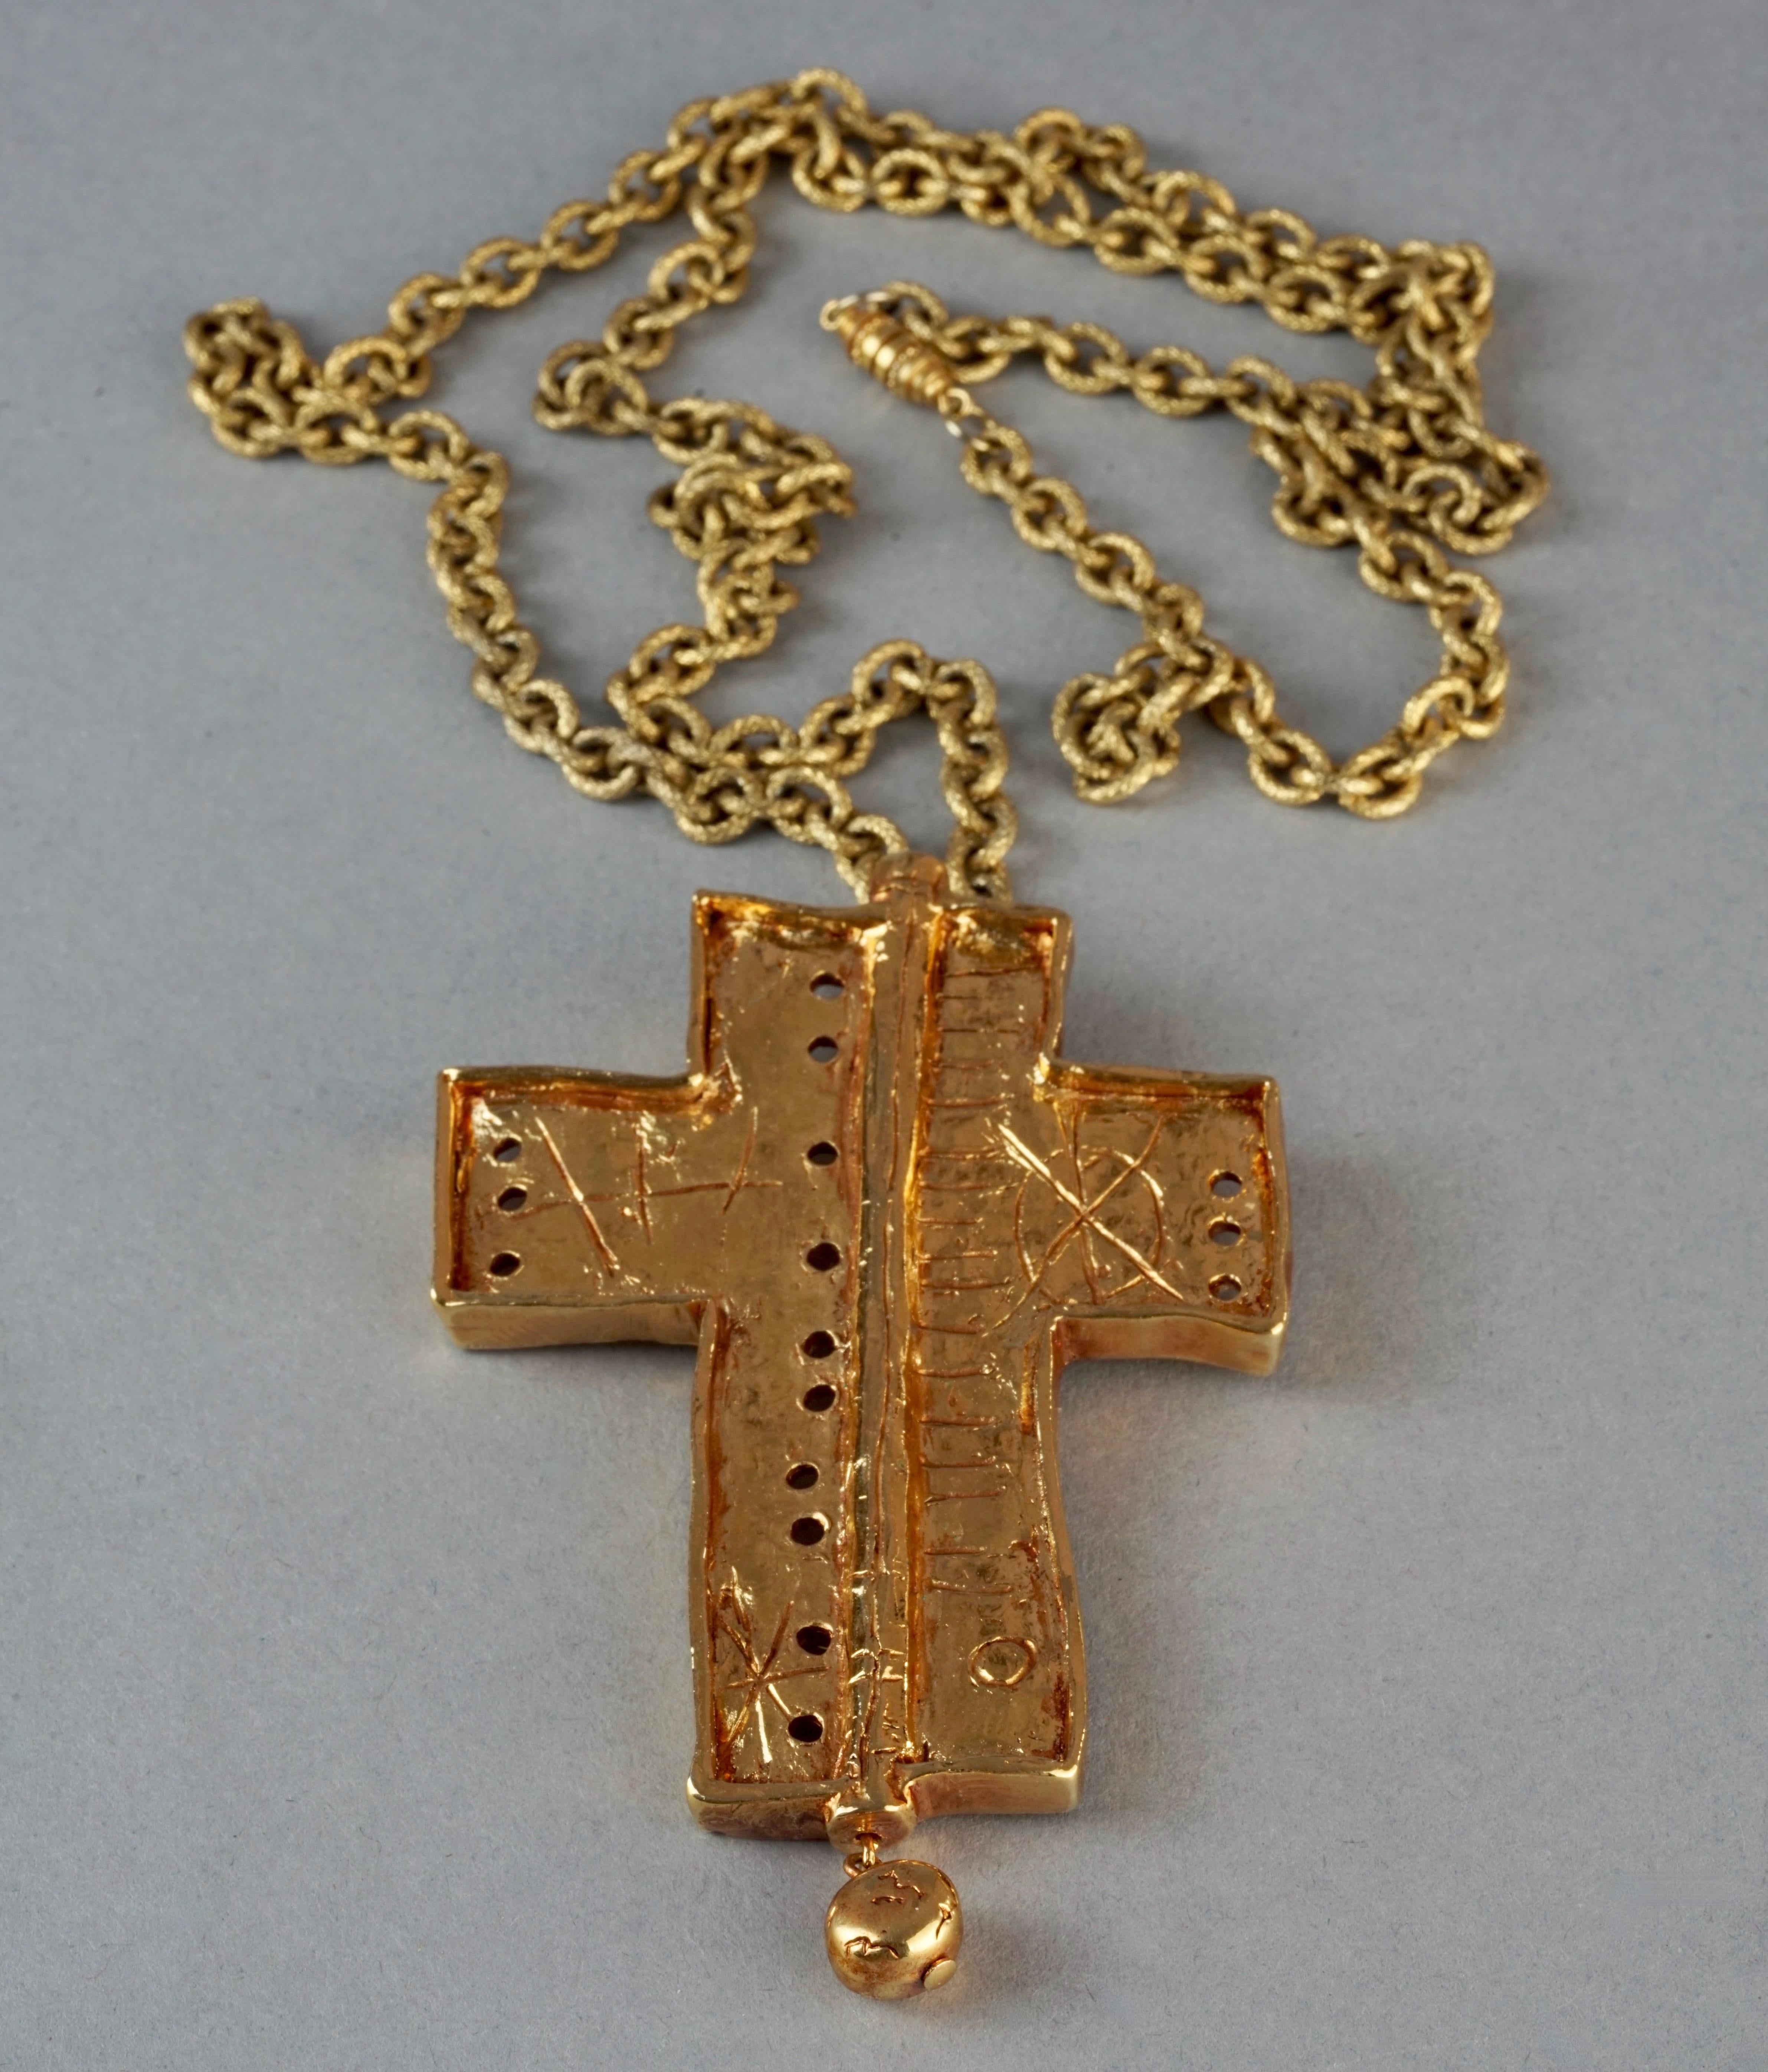 Vintage CHRISTIAN LACROIX Graffiti Cross Brooch Pendant Necklace 1